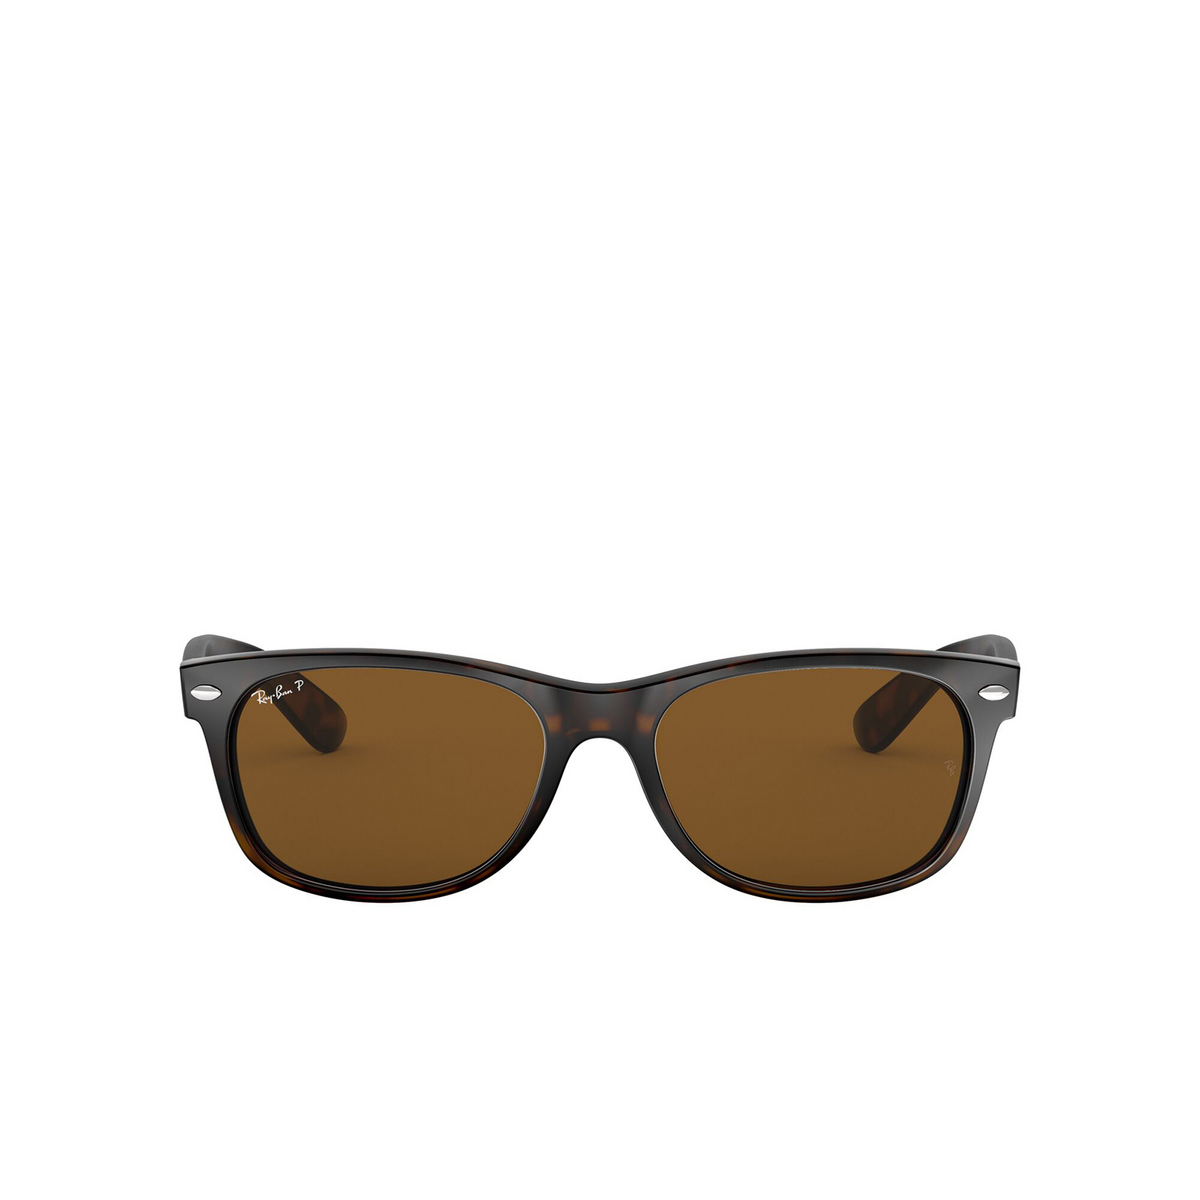 Ray-Ban NEW WAYFARER Sunglasses 902/57 Tortoise - front view